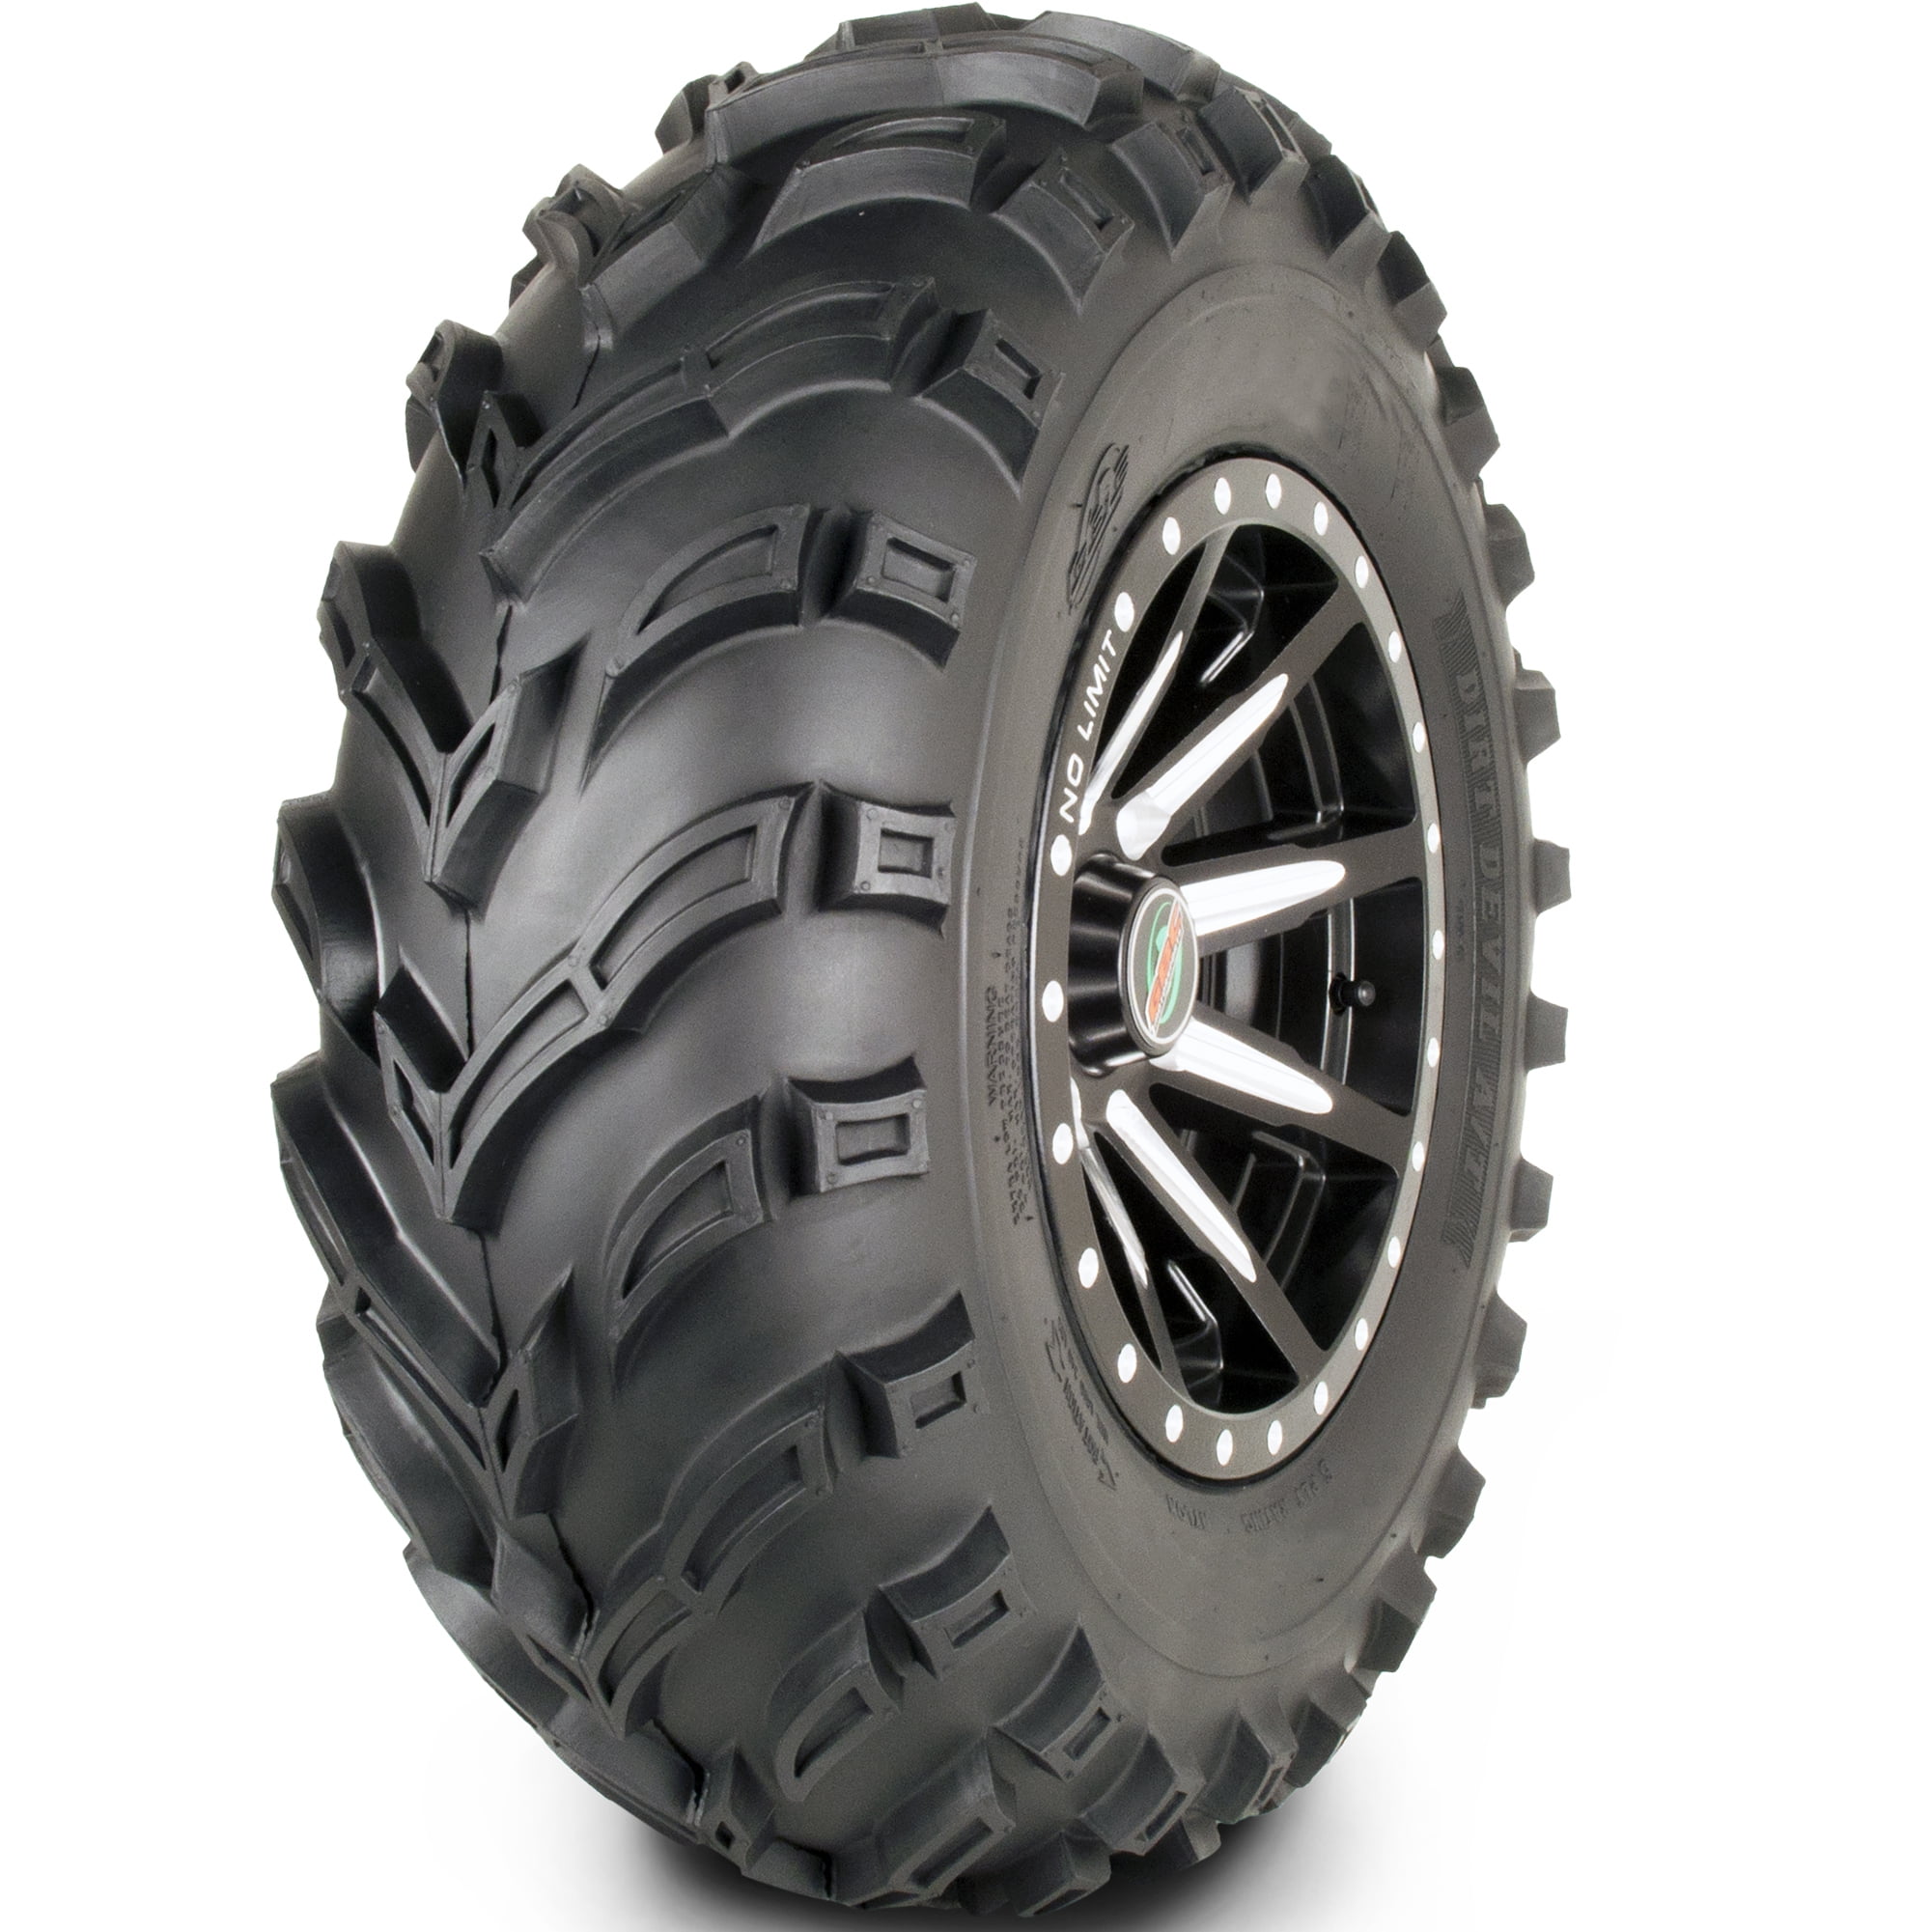 GBC Dirt Devil 24X9.00-11 6-Ply Rated All Terrain ATV Tire